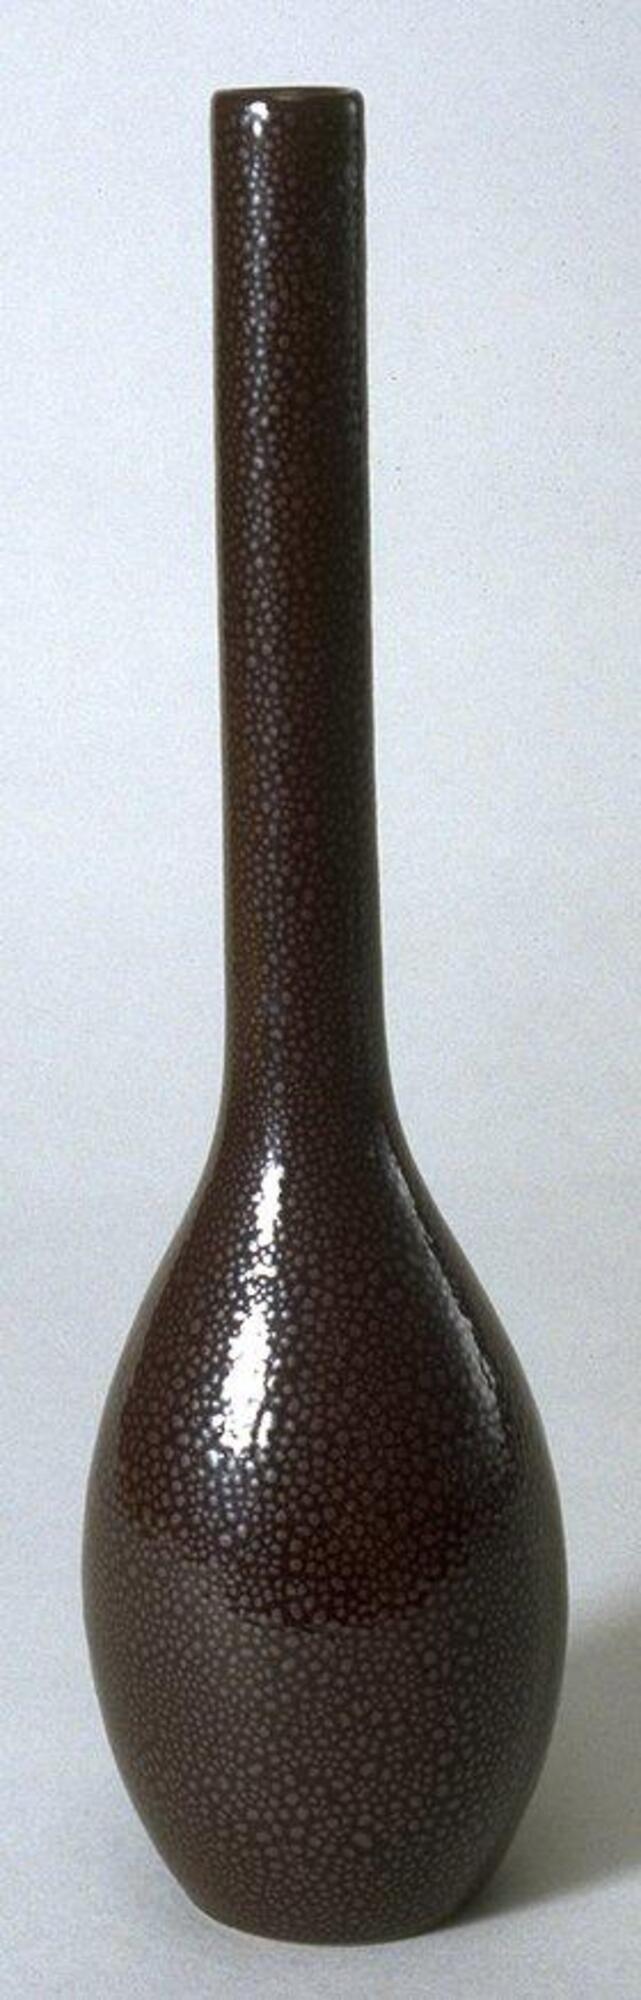 Tenmoku ware bottle with &#39;oilspot glaze&#39;,egg shaped base and long, narrow, cylinder neck.